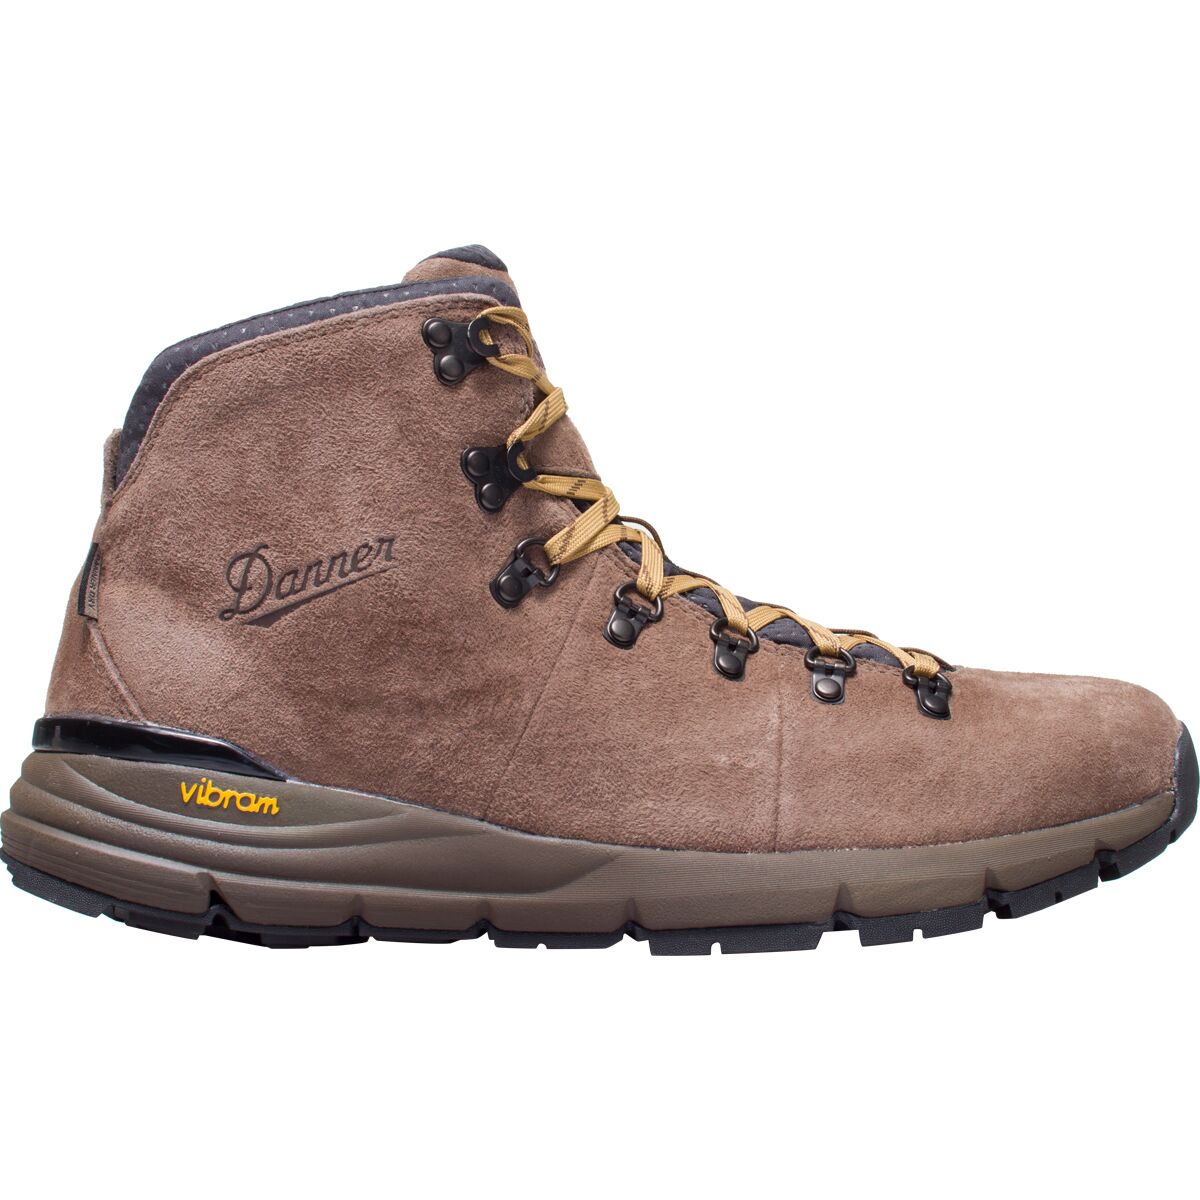 Danner Mountain 600 Hiking Boot - Men's - Footwear